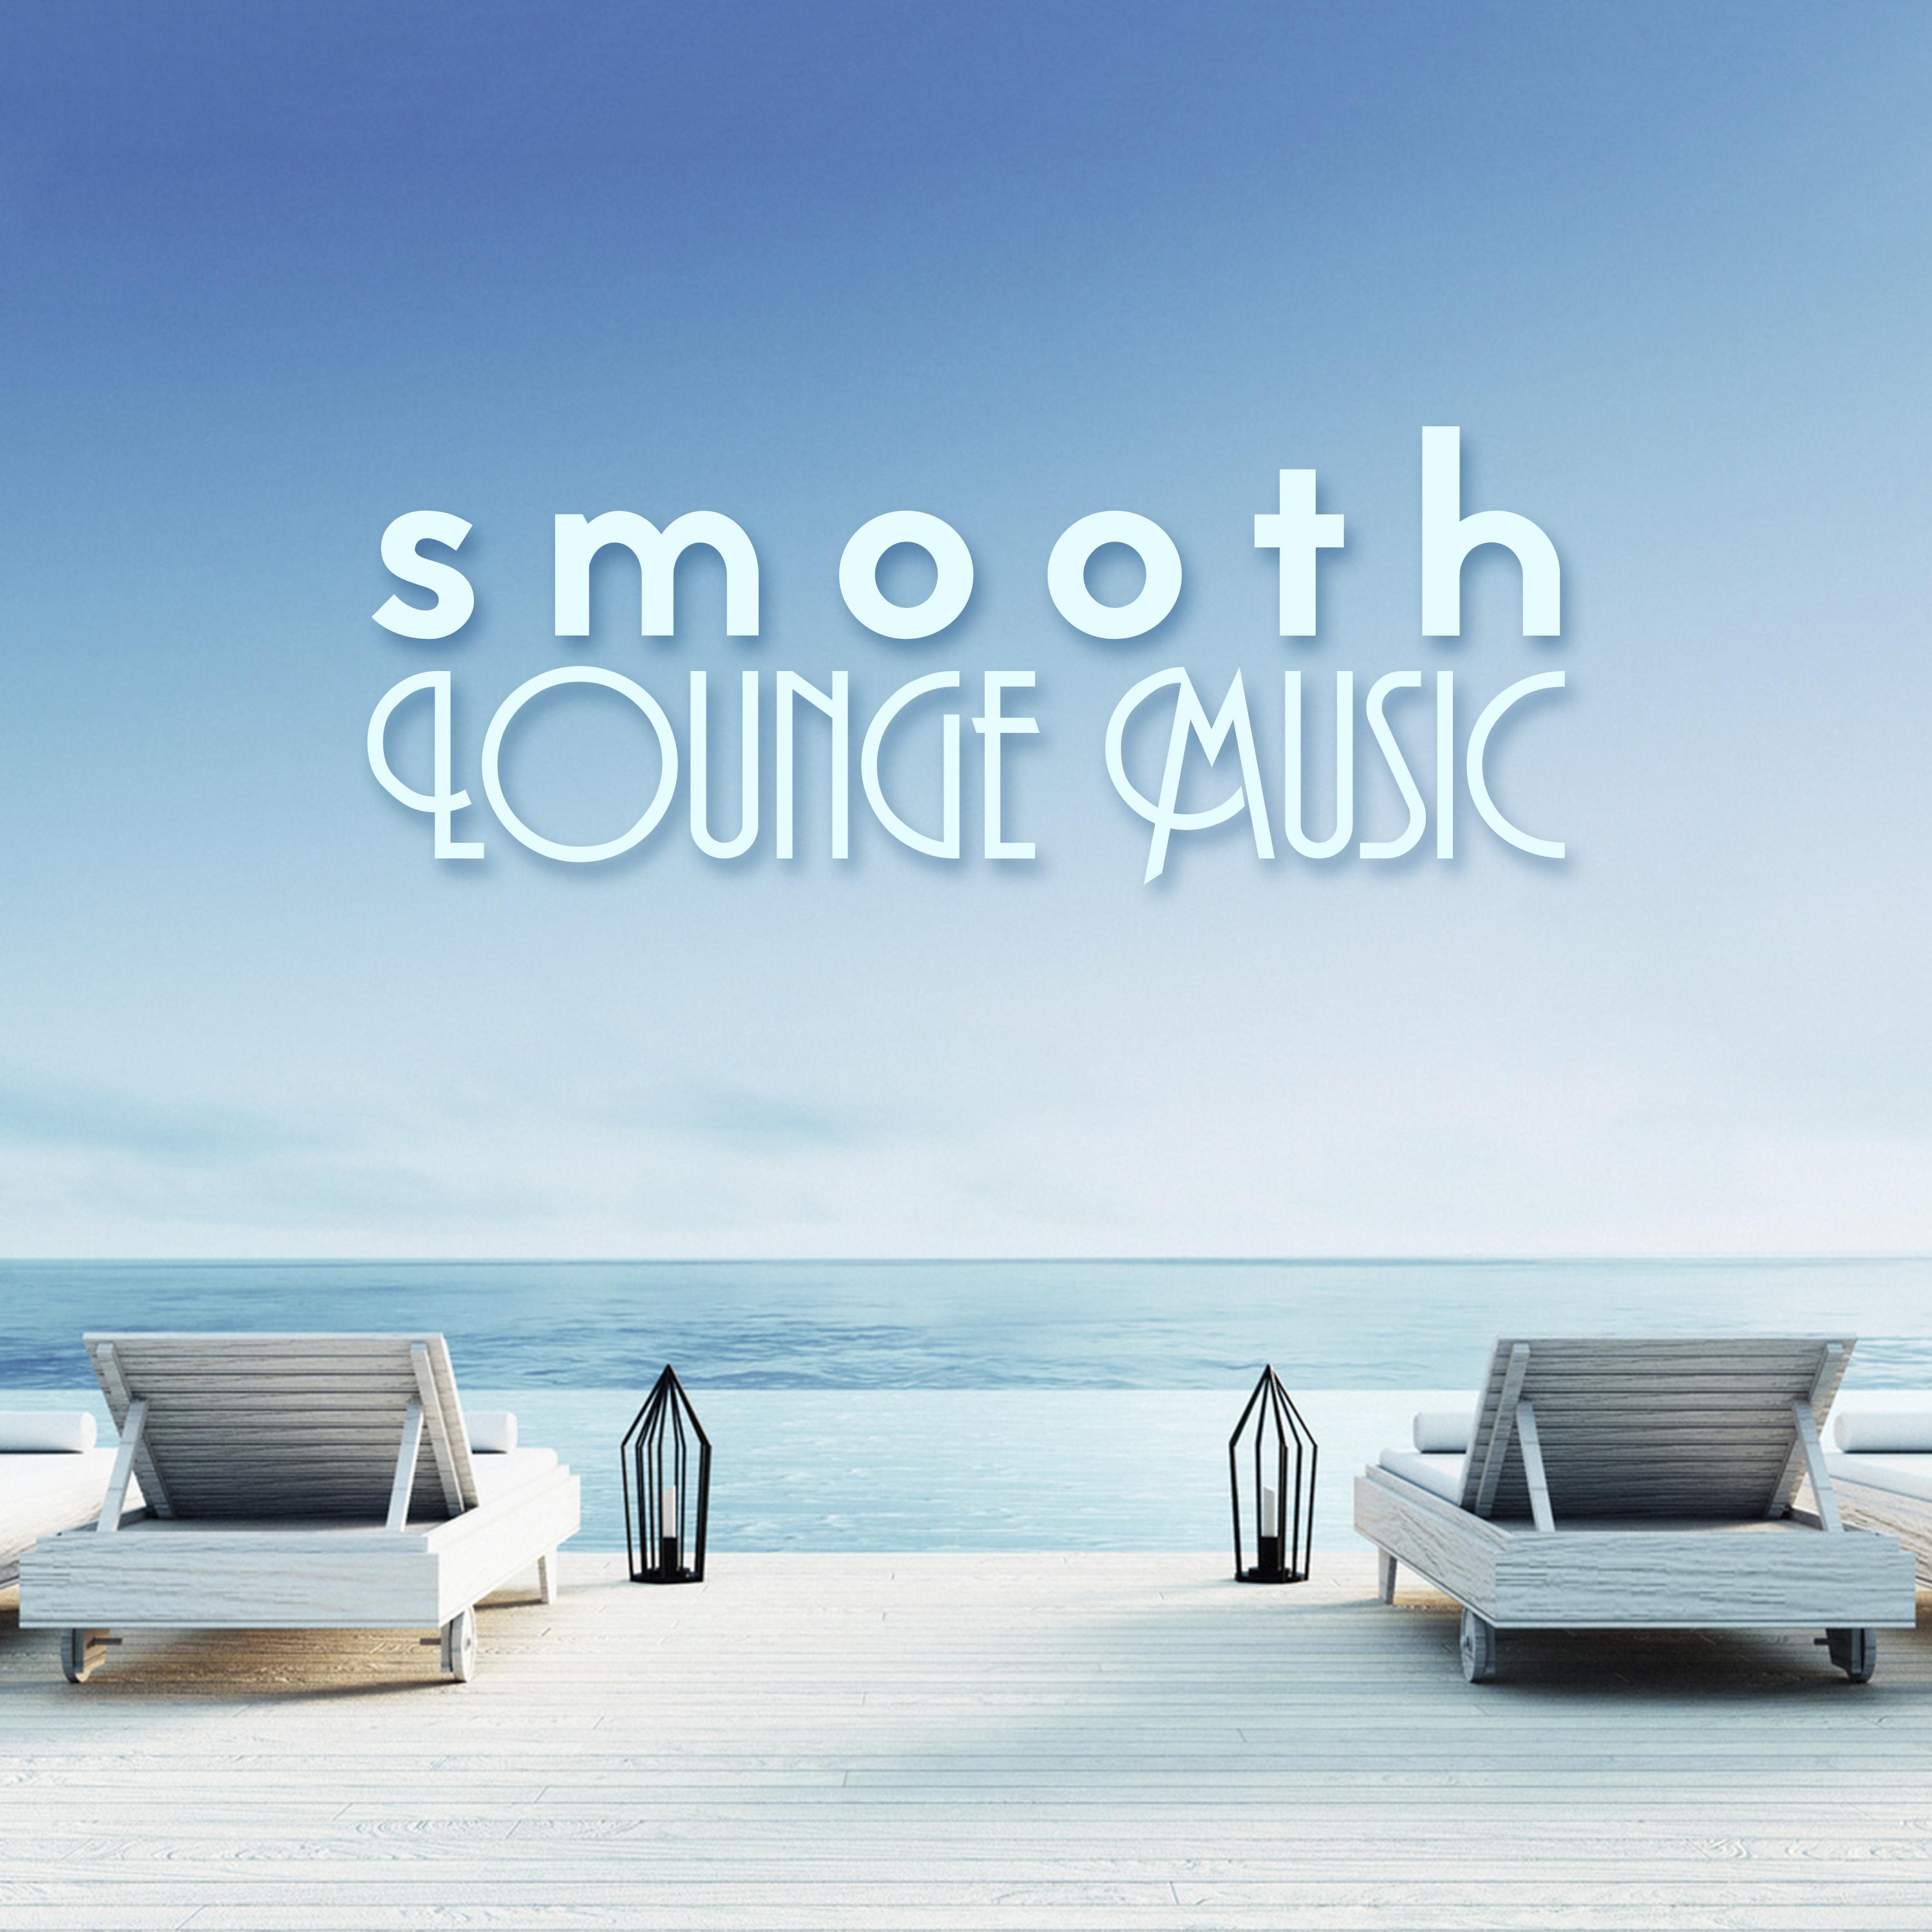 Smooth Lounge Music